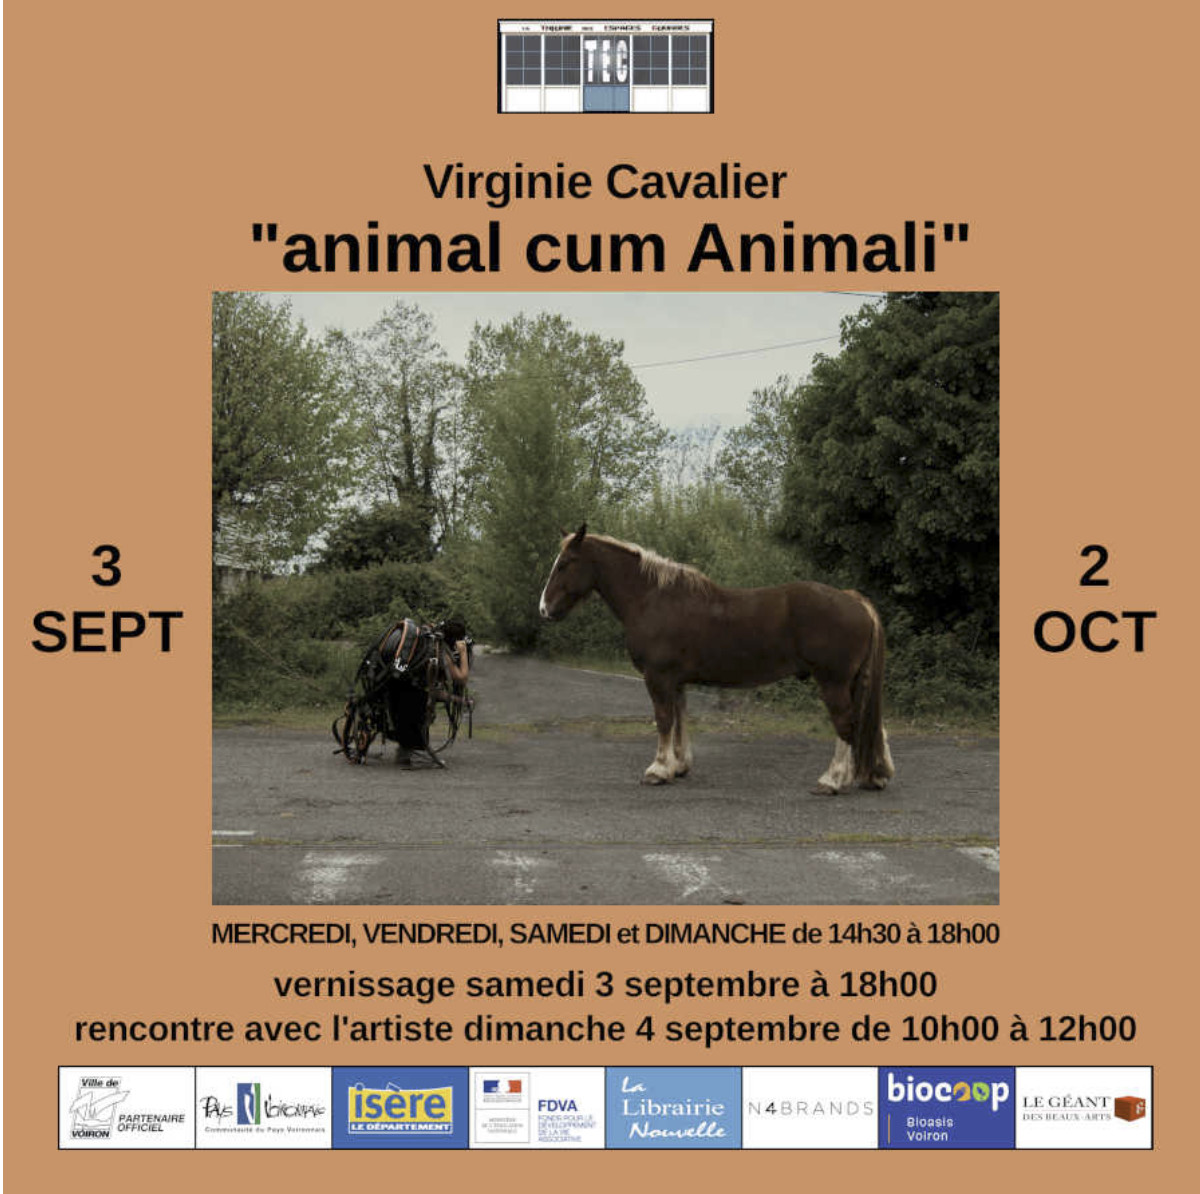 Virginie Cavalier "animal cum Animali" sur le site d’ARTactif